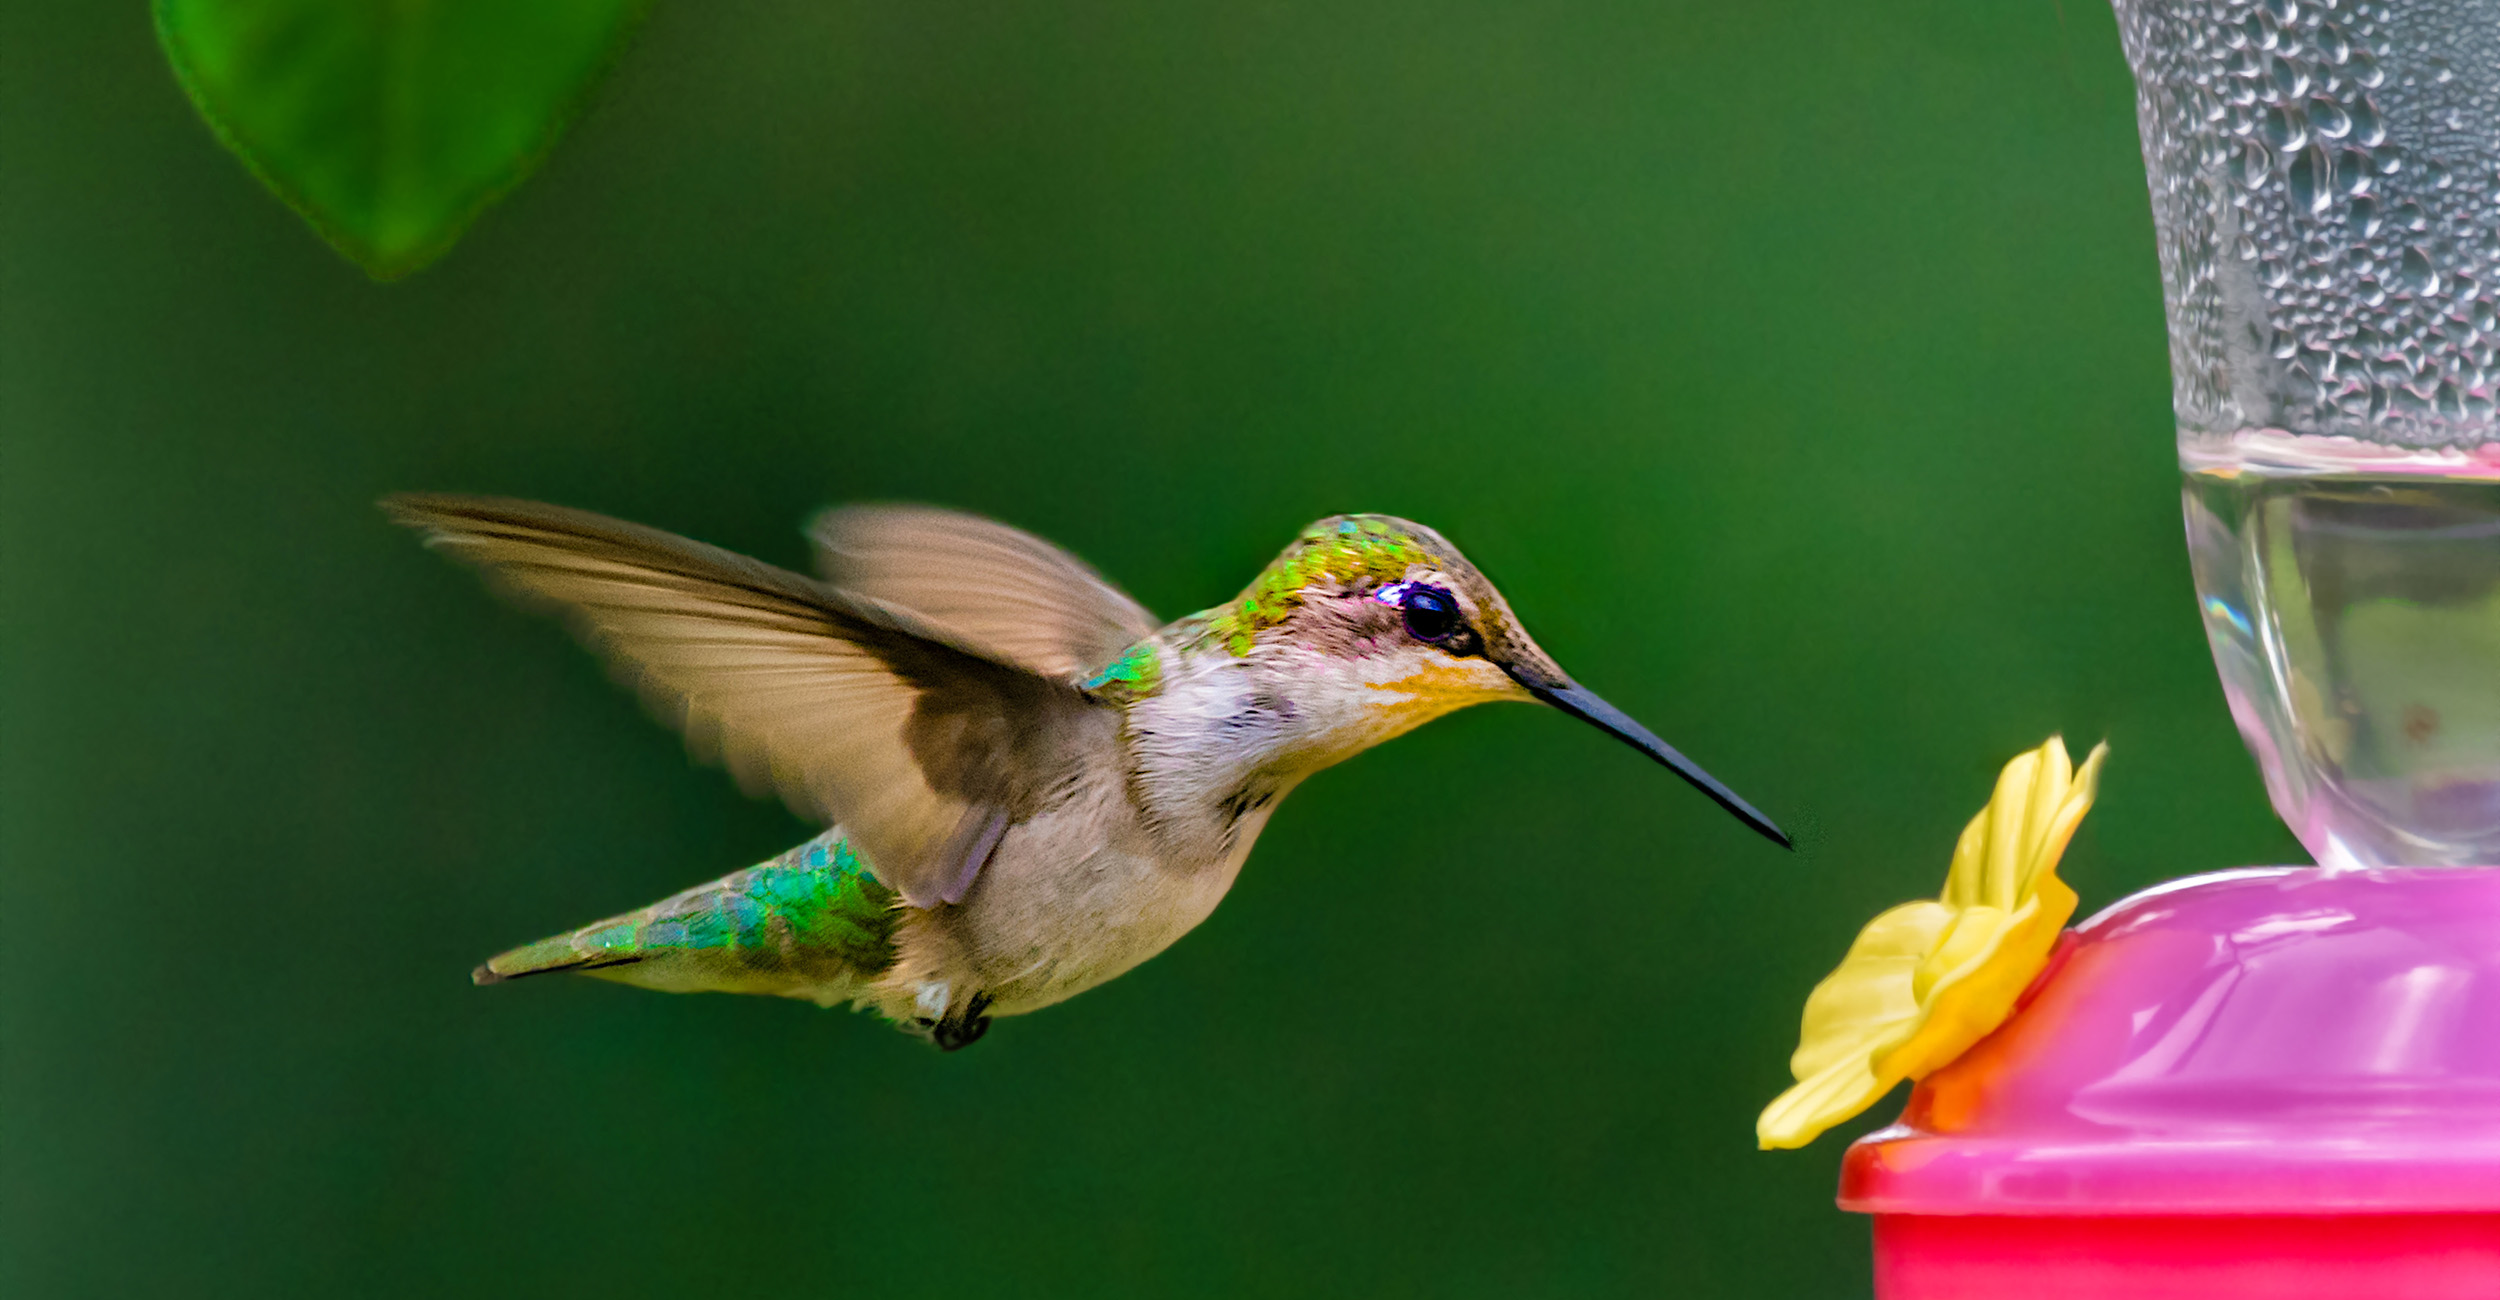 Hummingbird feeding at a hummingbird feeder.